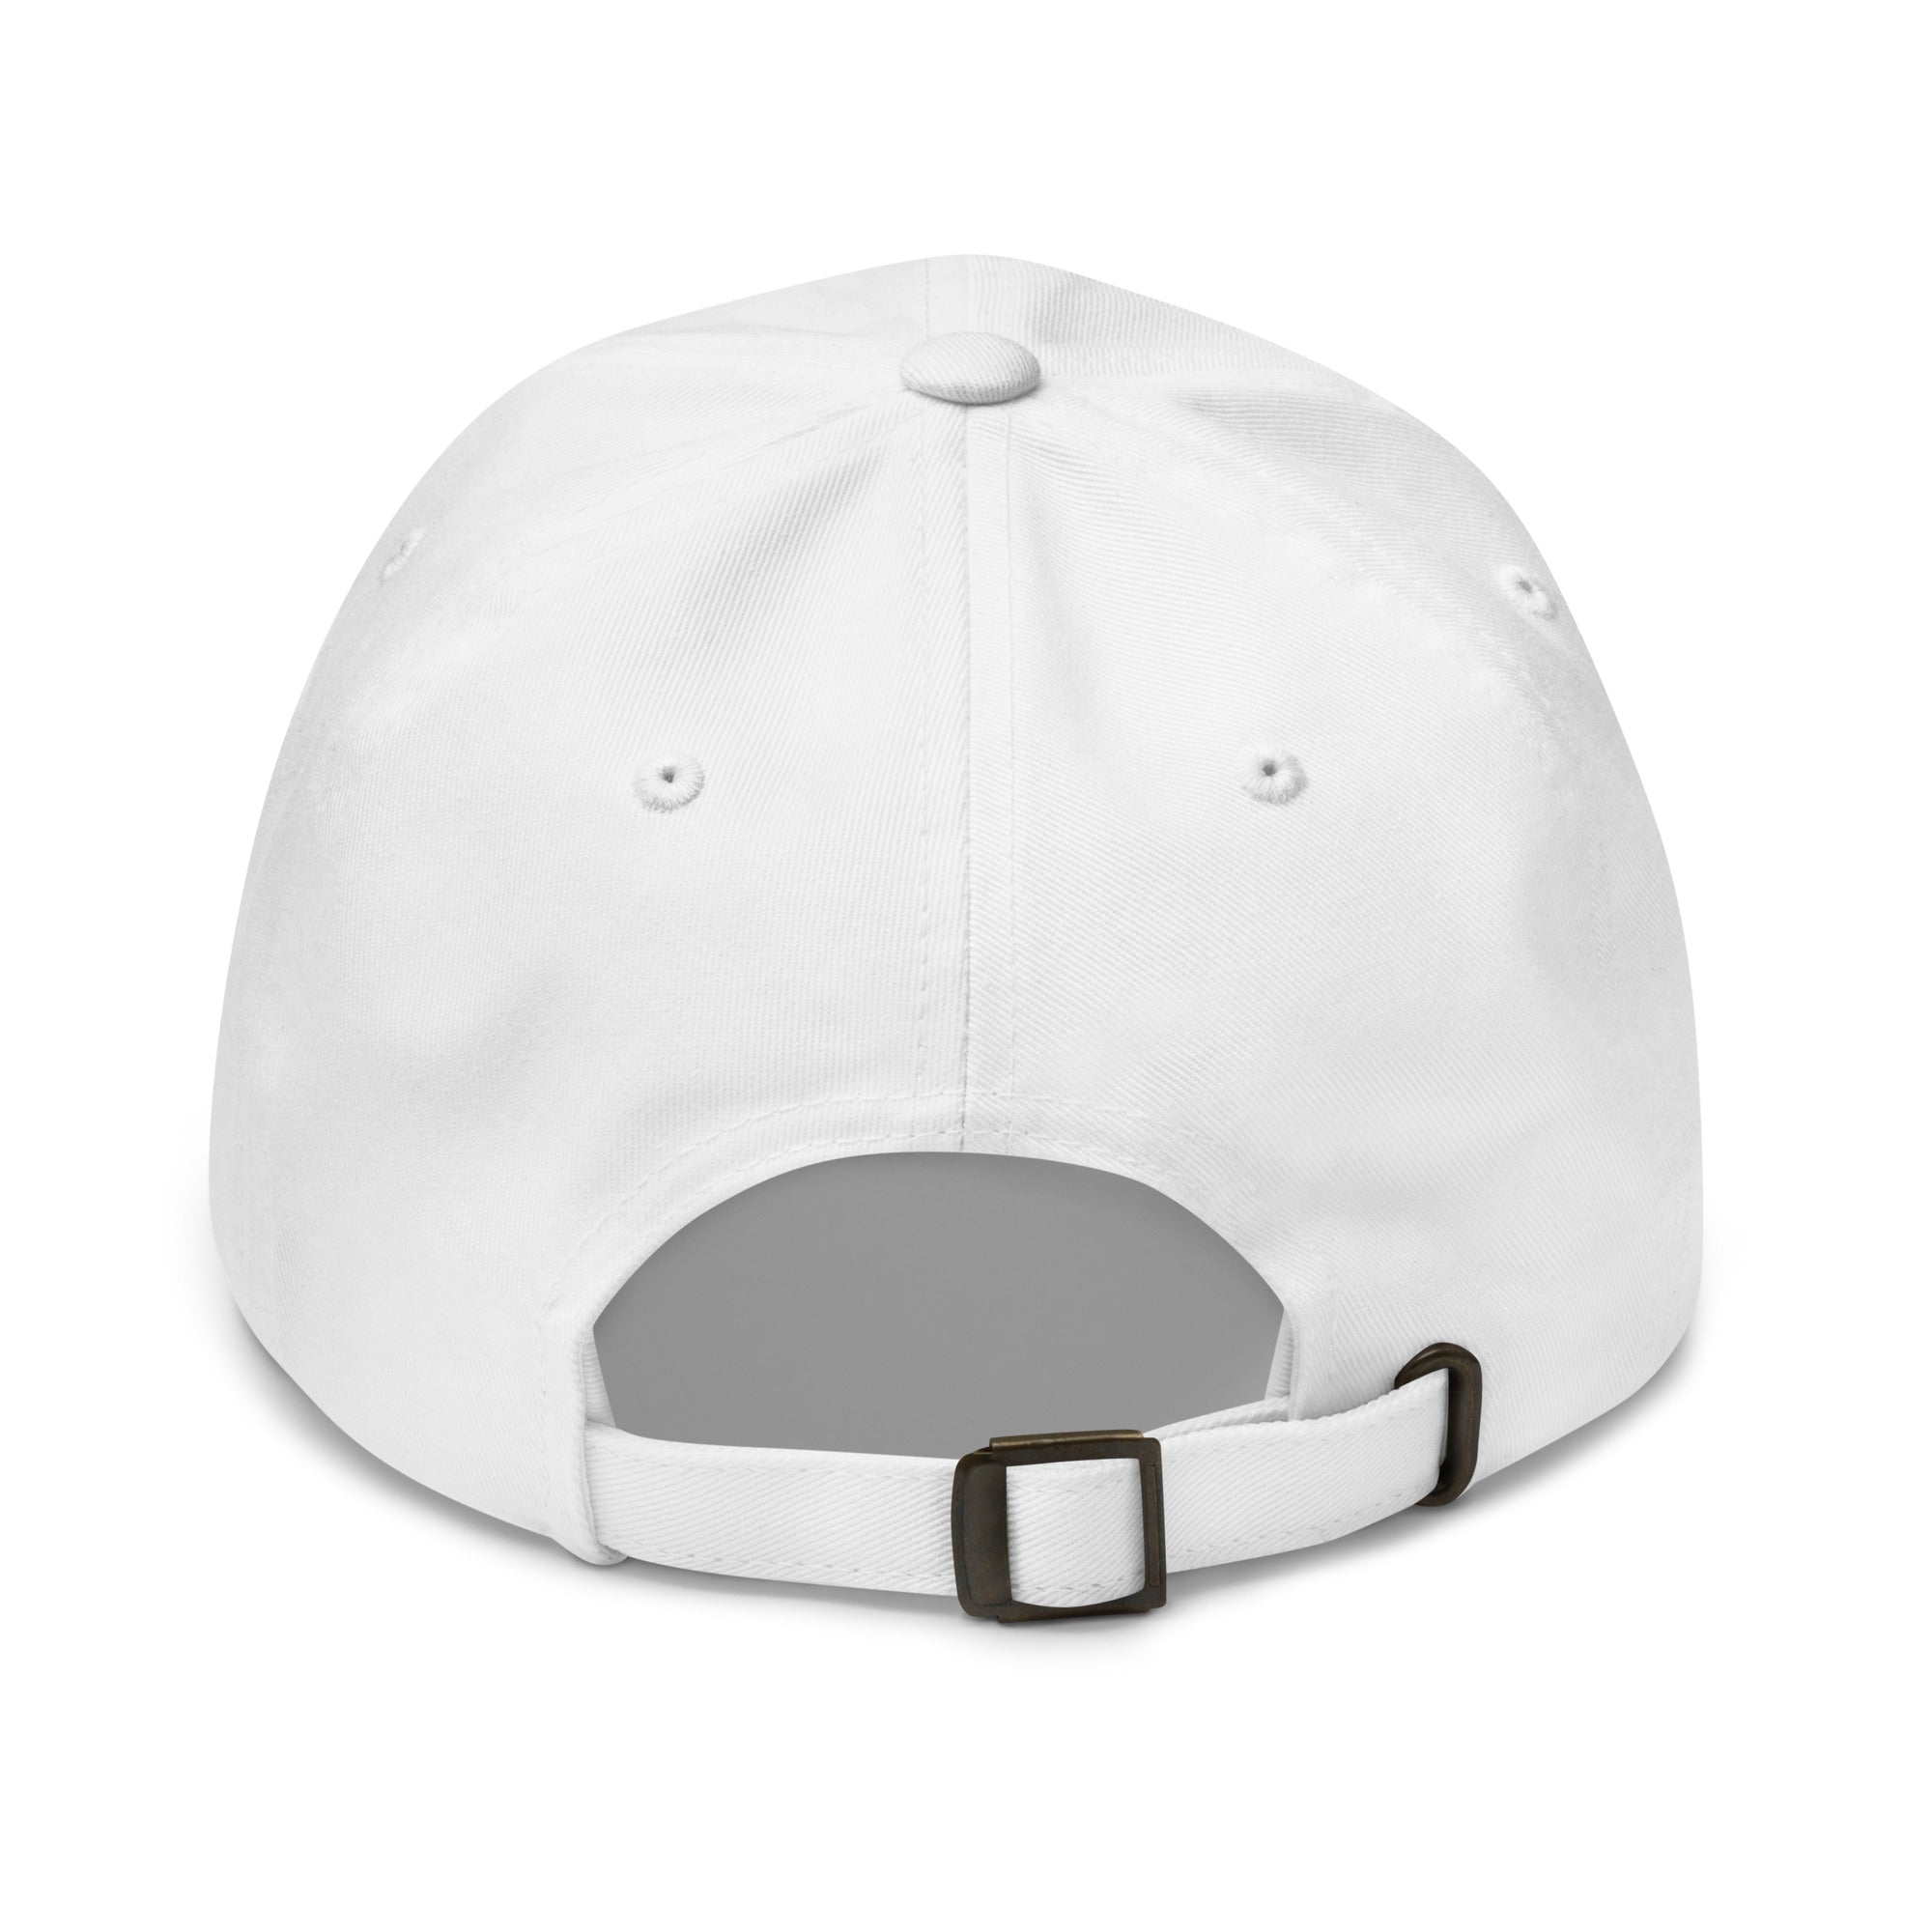 White Hat (Georgetown Law Fed Soc)